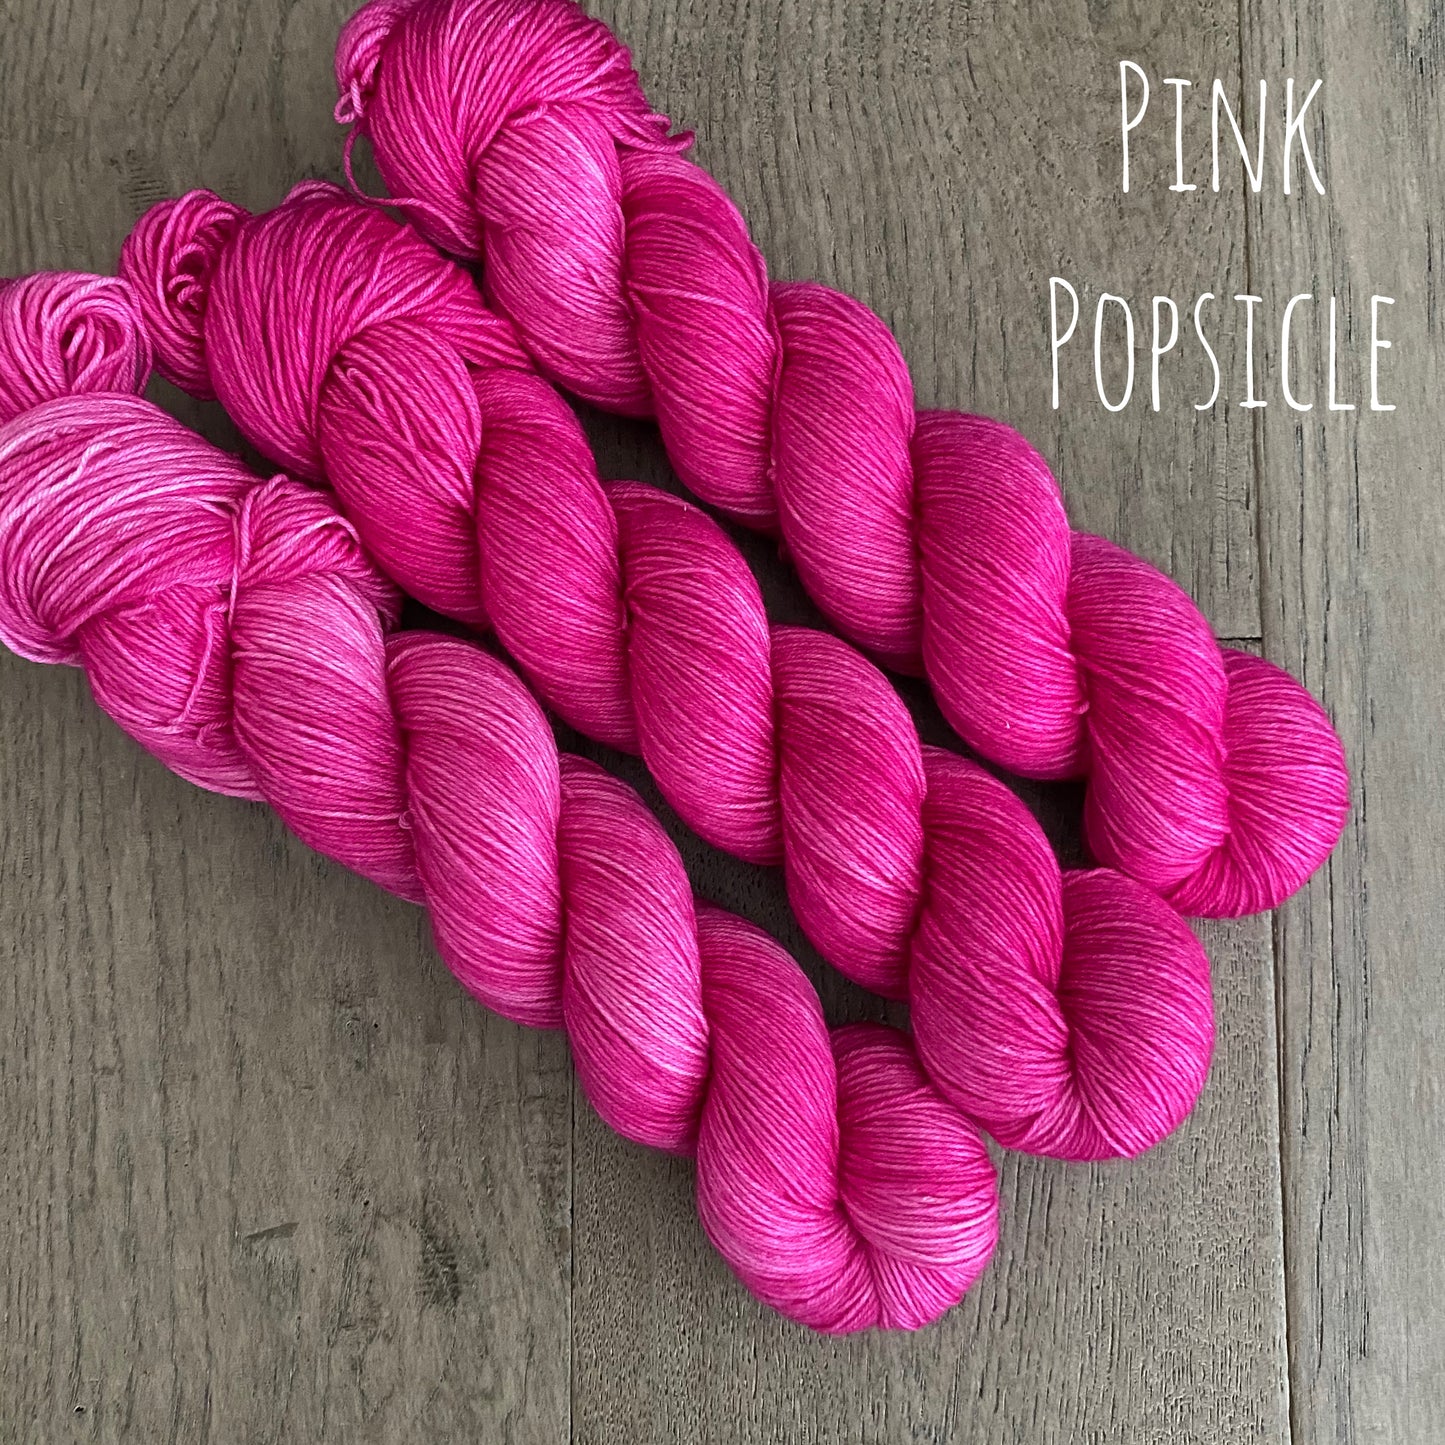 Pink Popsicle Fingering Yarn